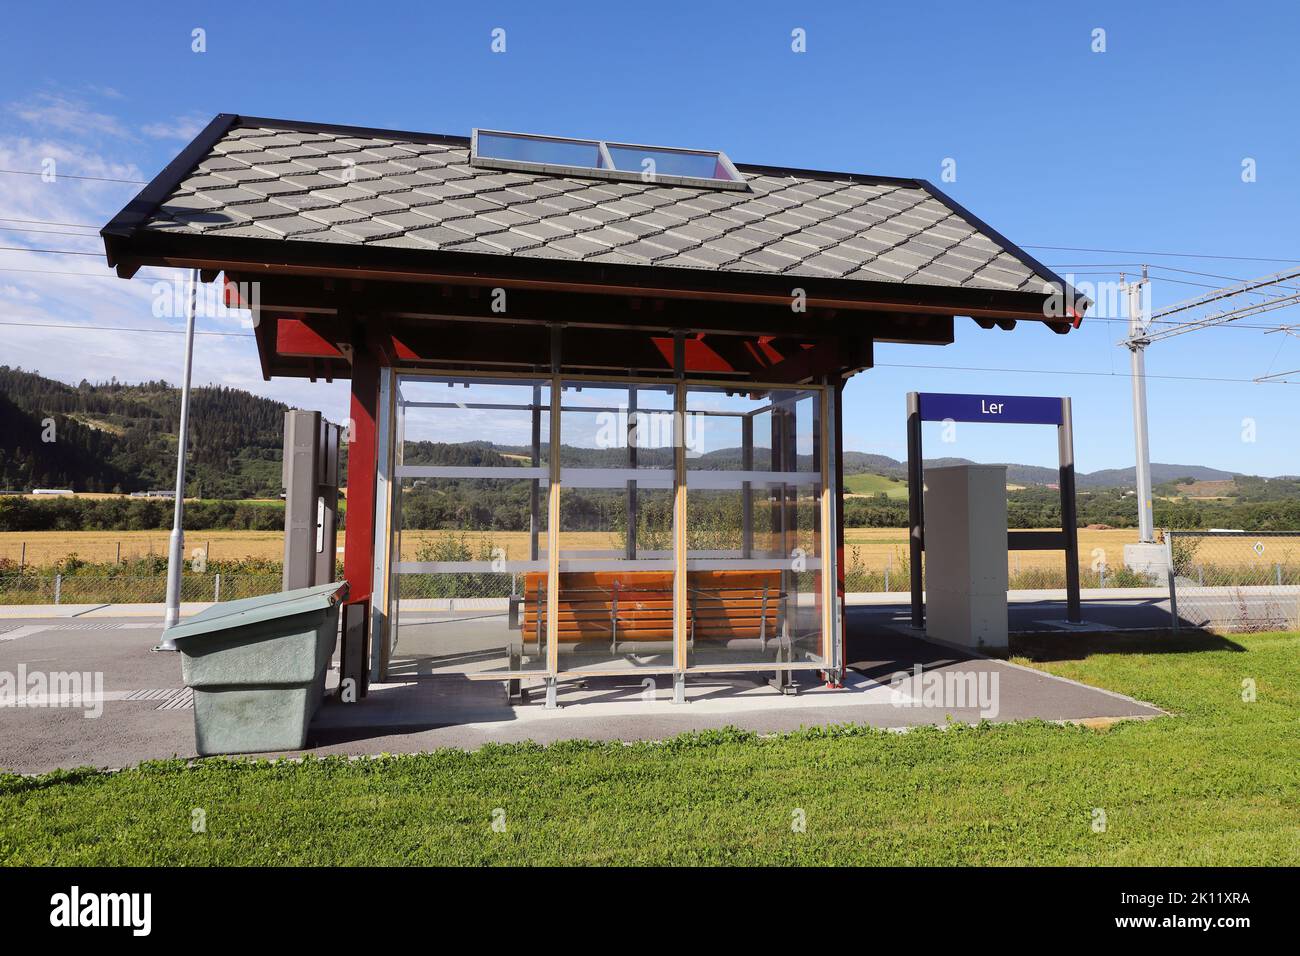 Ler, Norway - September 2, 2022: Ler commuter train railroad station. Stock Photo